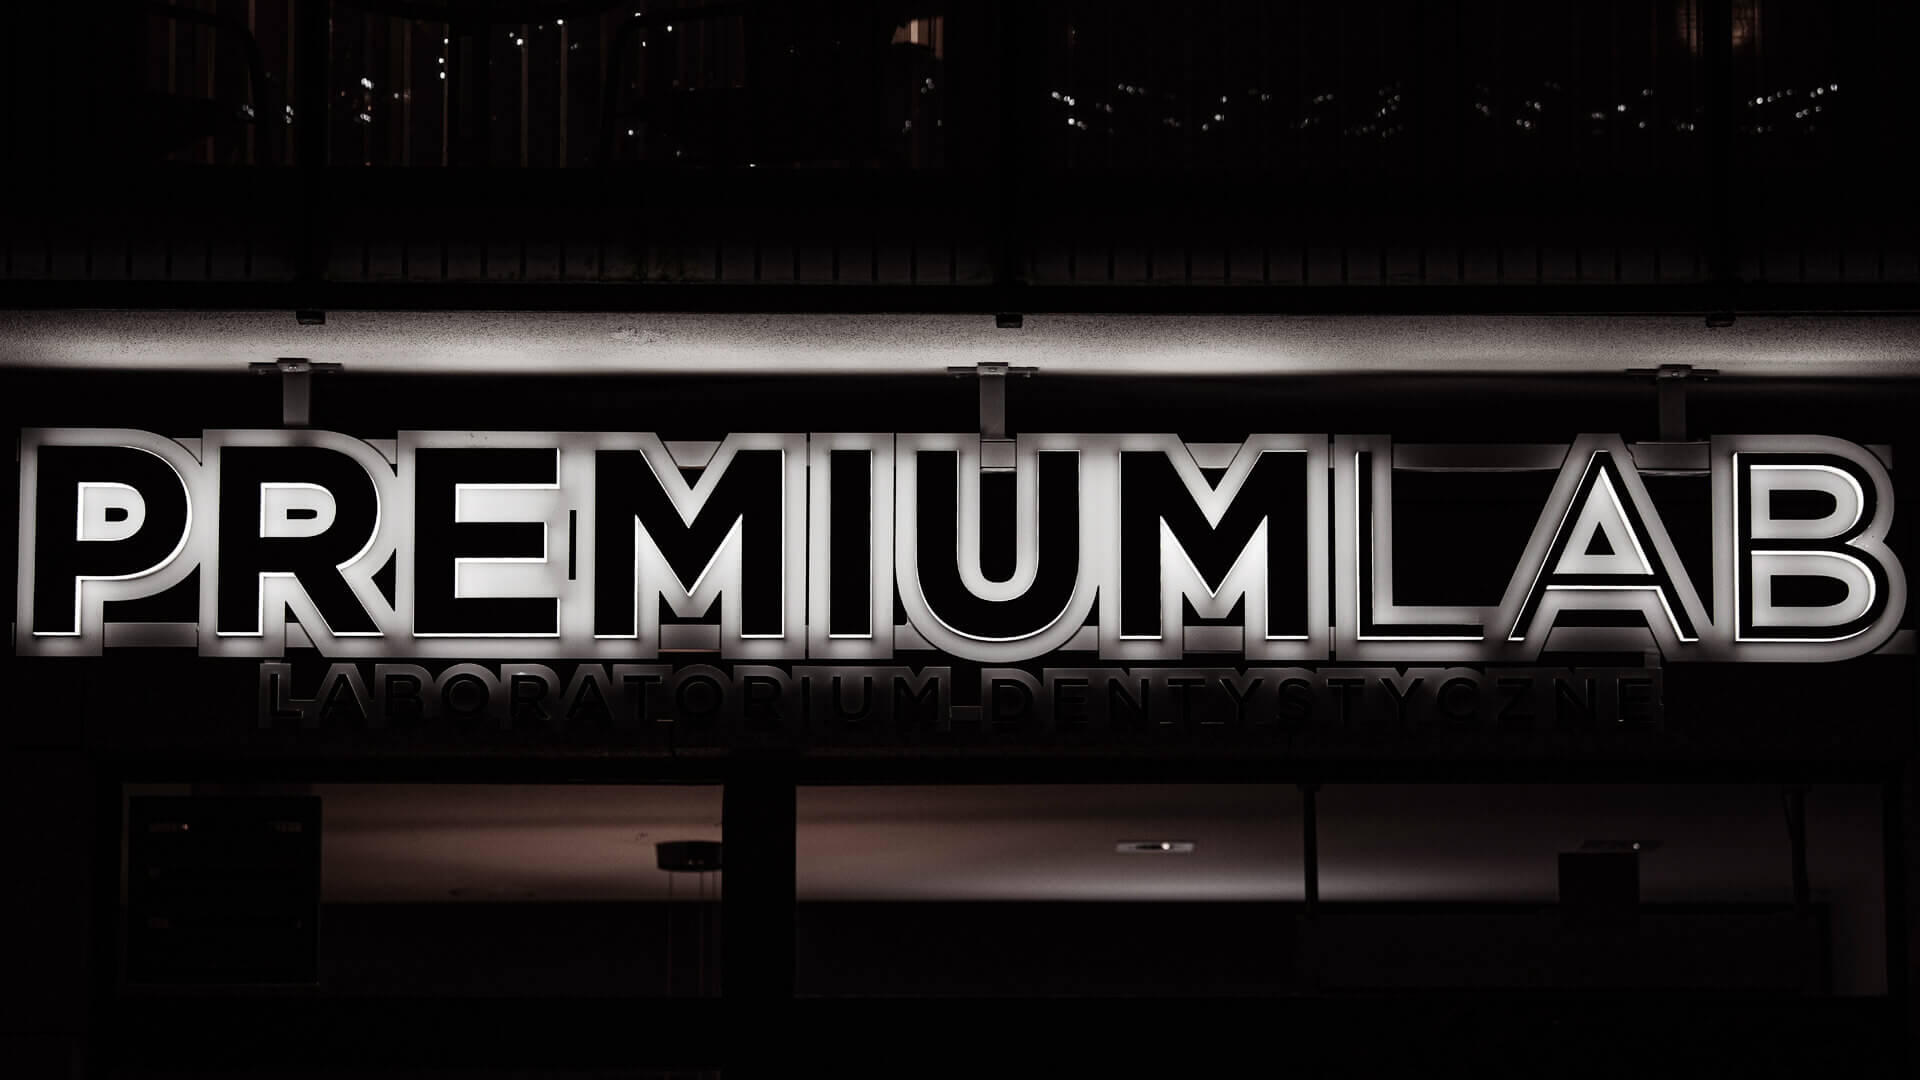 Premium LAB - Premium LAB letters, LED side light, high quality.